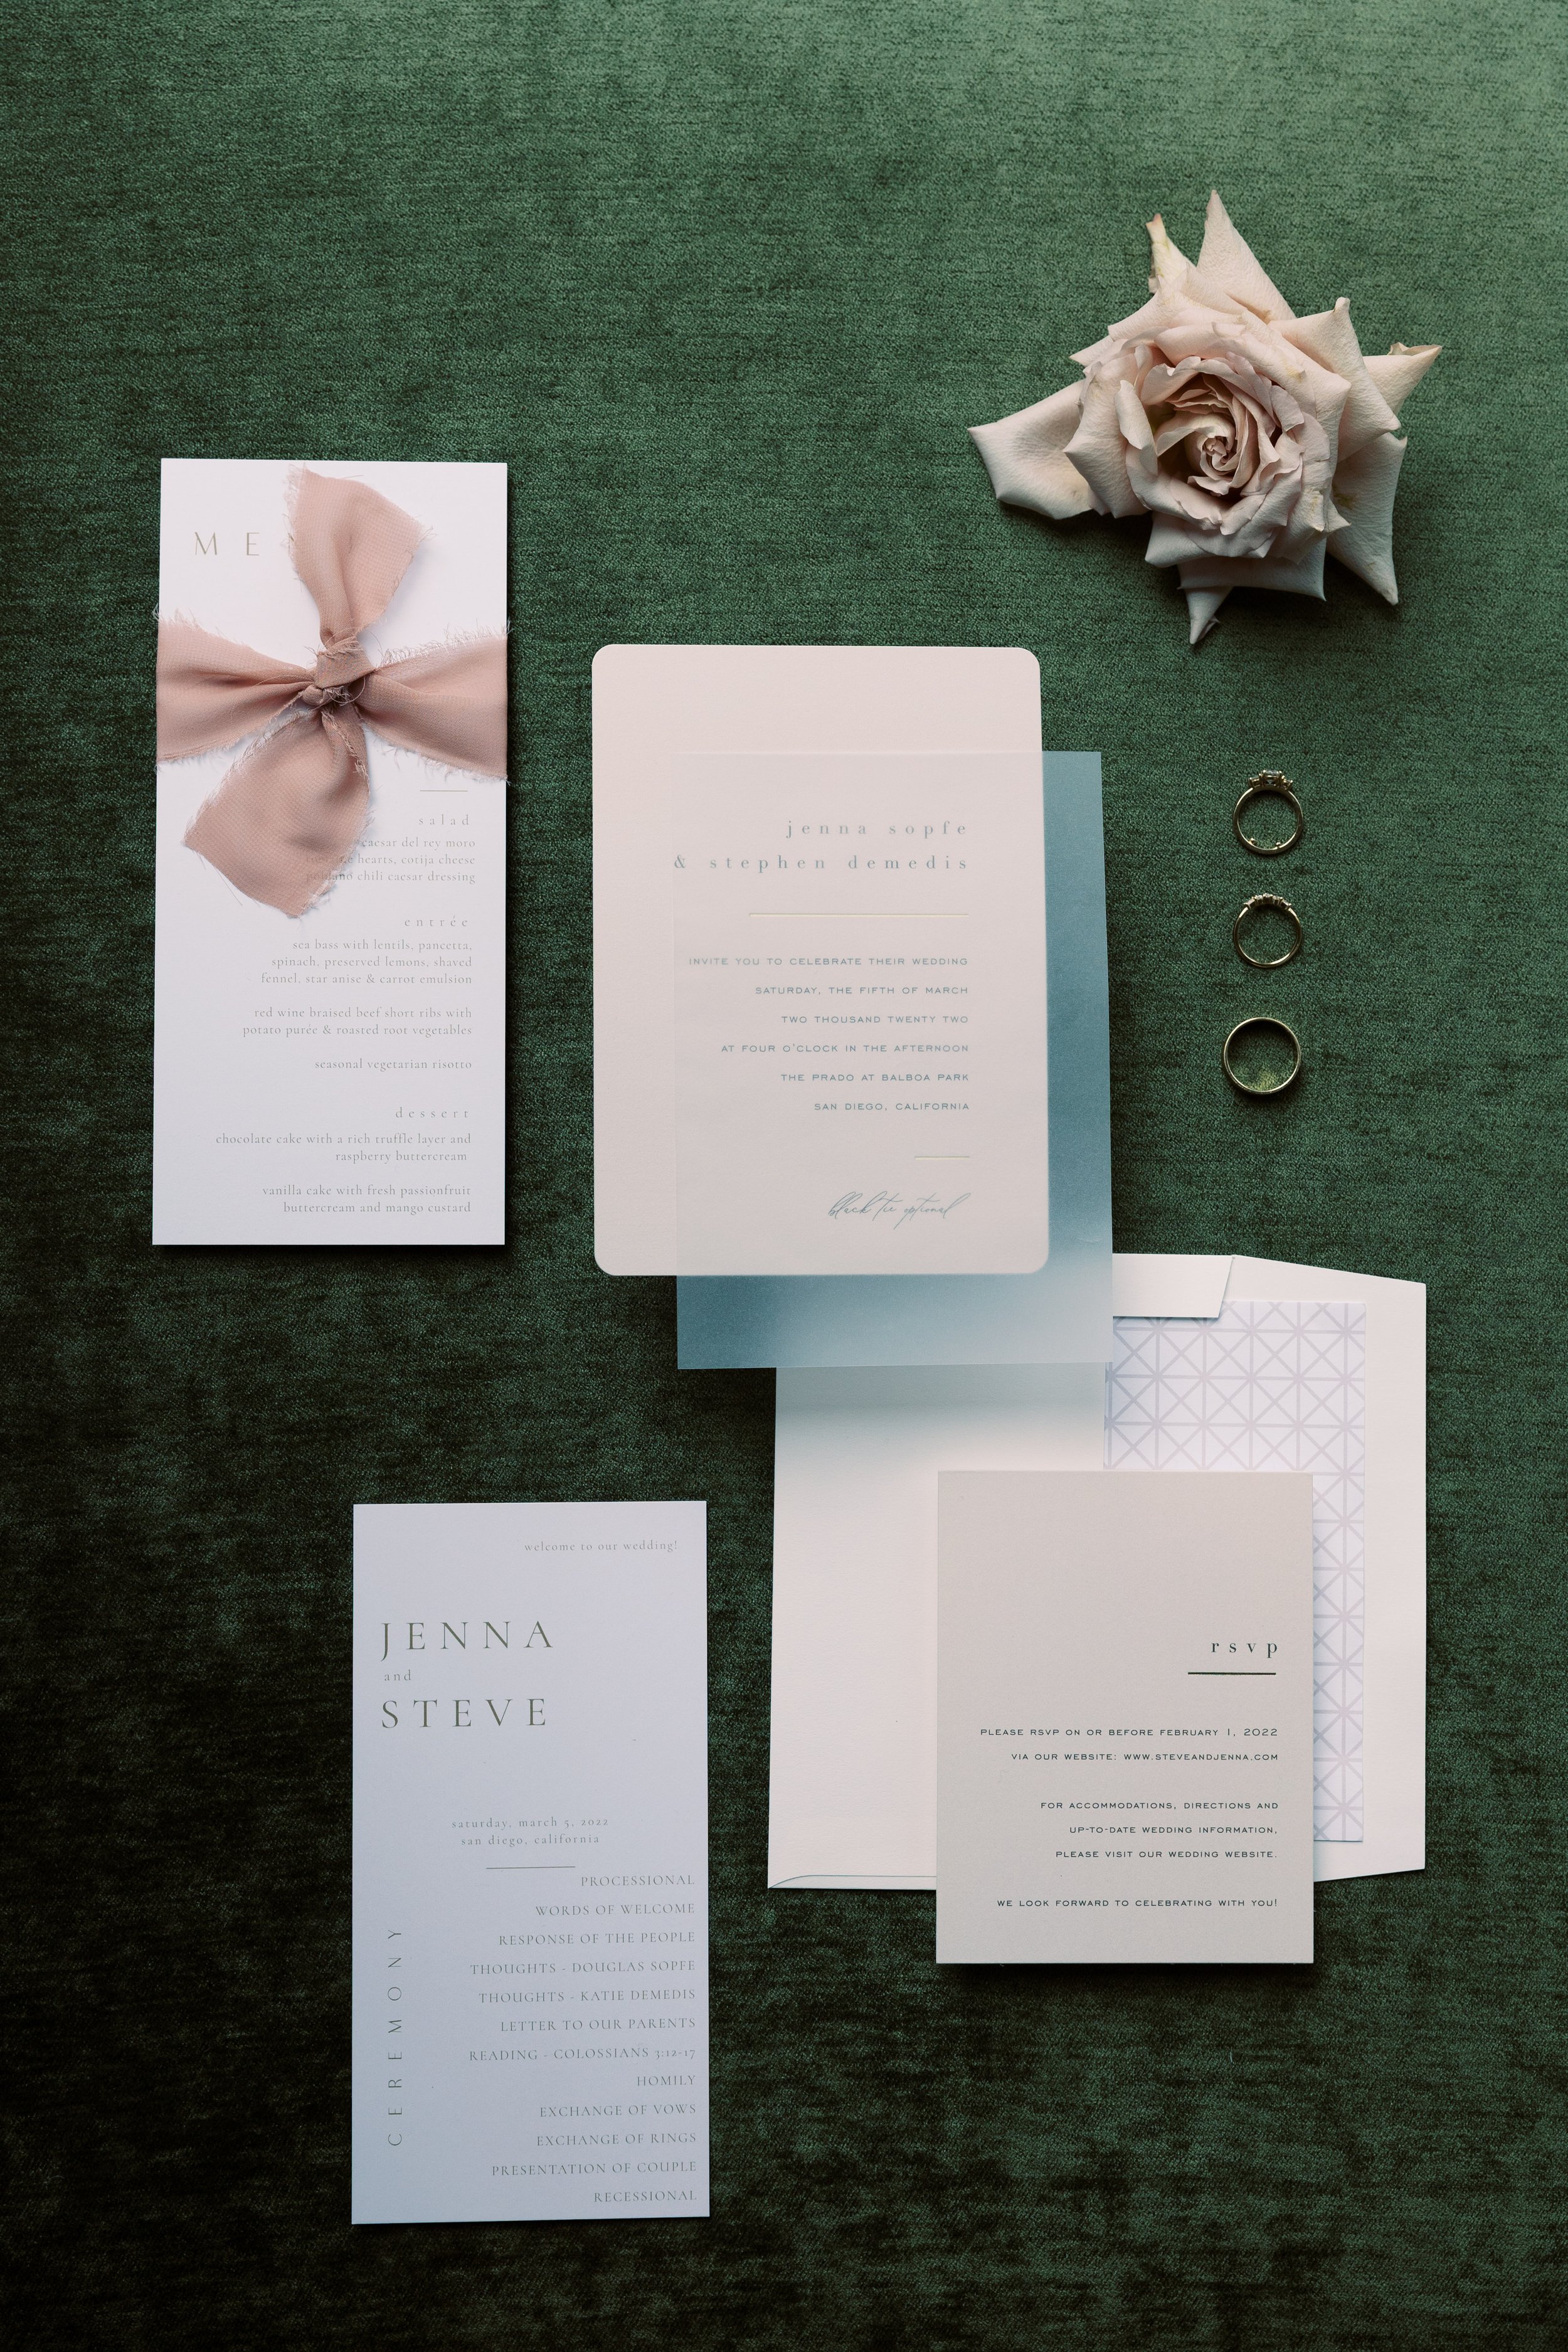 Classic romantic wedding invitations for a chic san diego wedding.